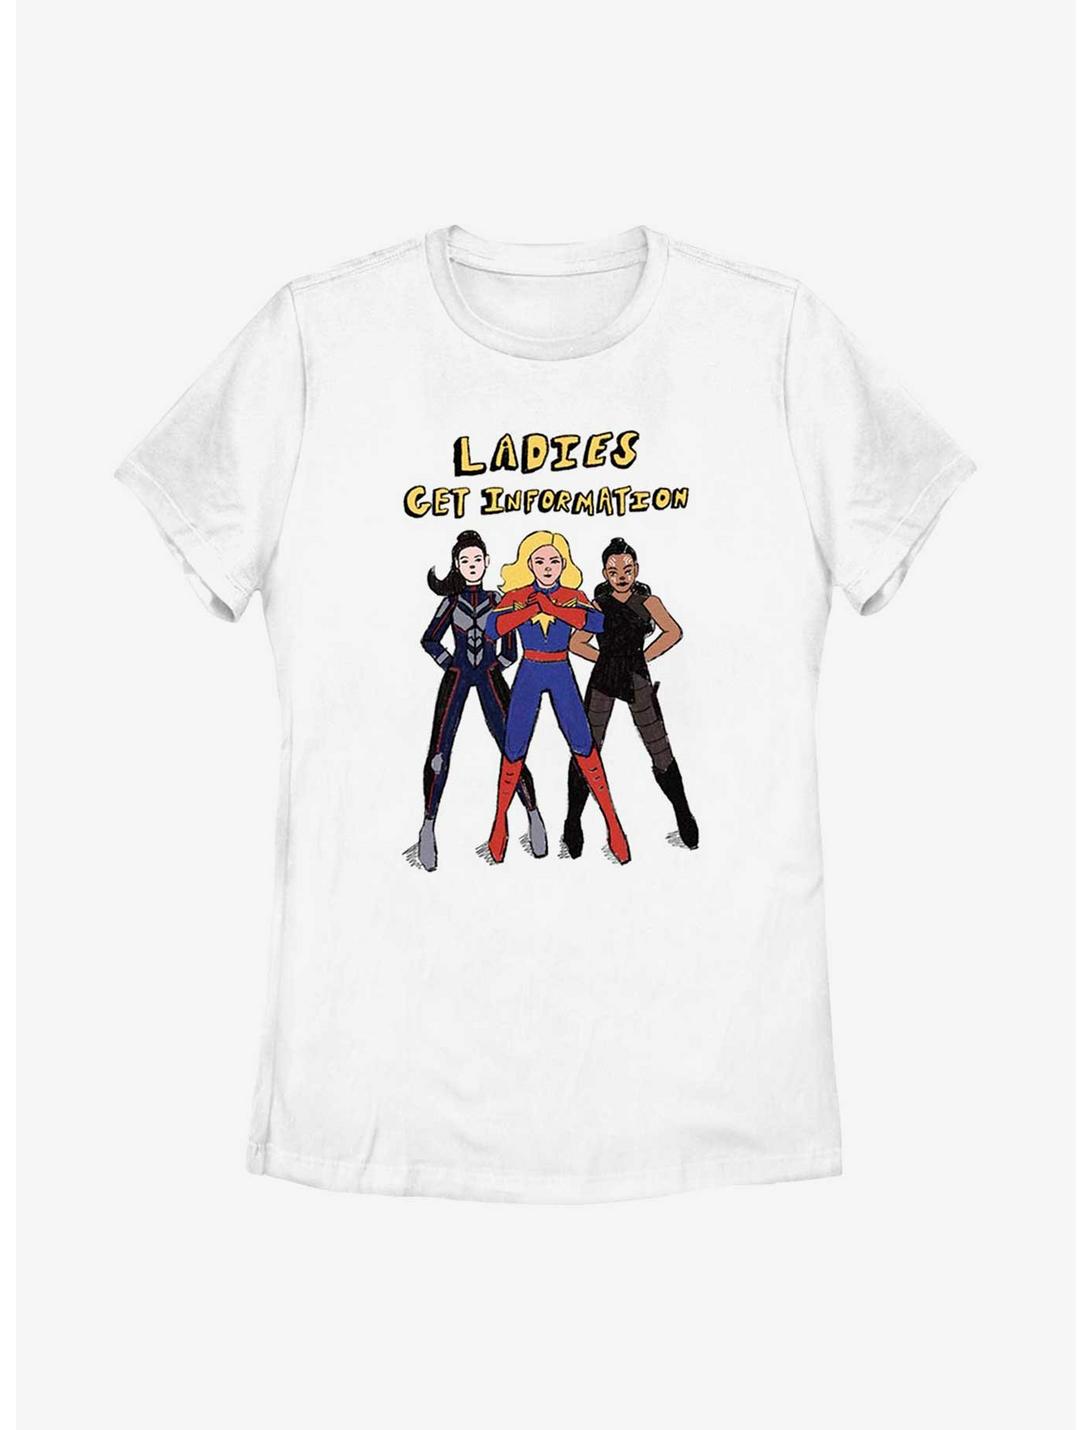 Marvel Ms. Marvel Ladies Get Info Womens T-Shirt, WHITE, hi-res